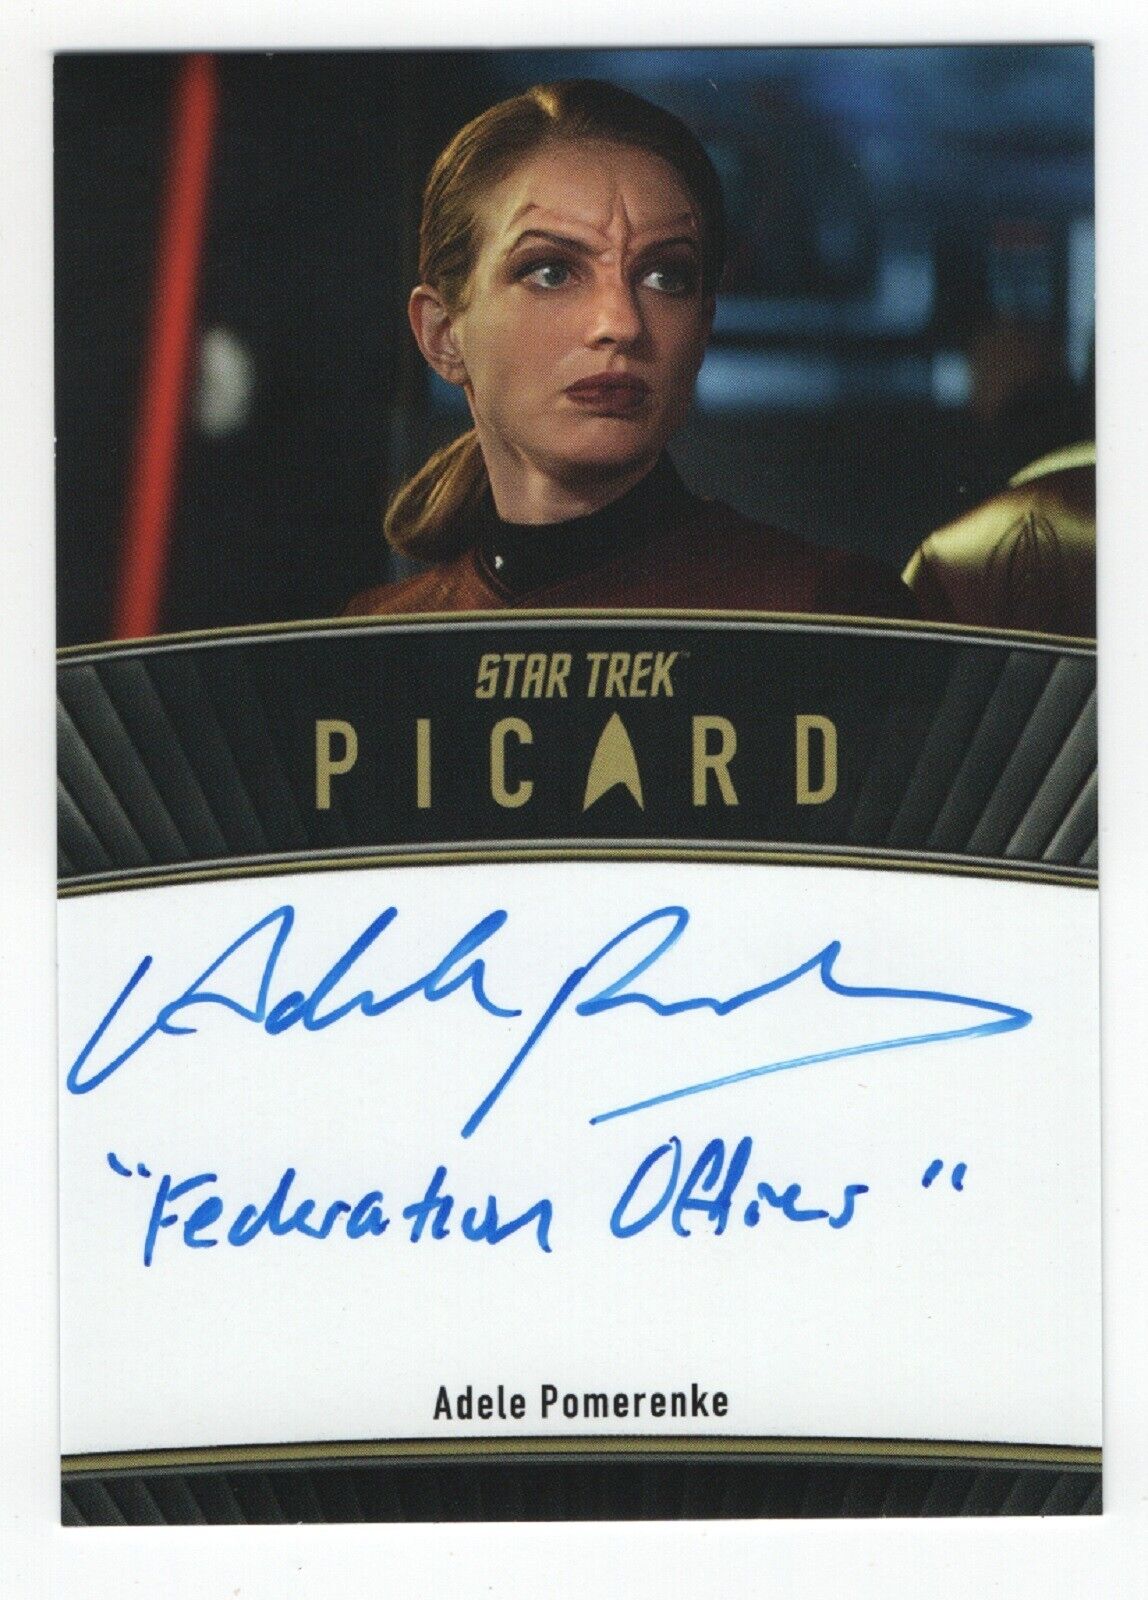 Star Trek Picard seasons 2 & 3 Adele Pomerenke as Kemi Inscription auto card